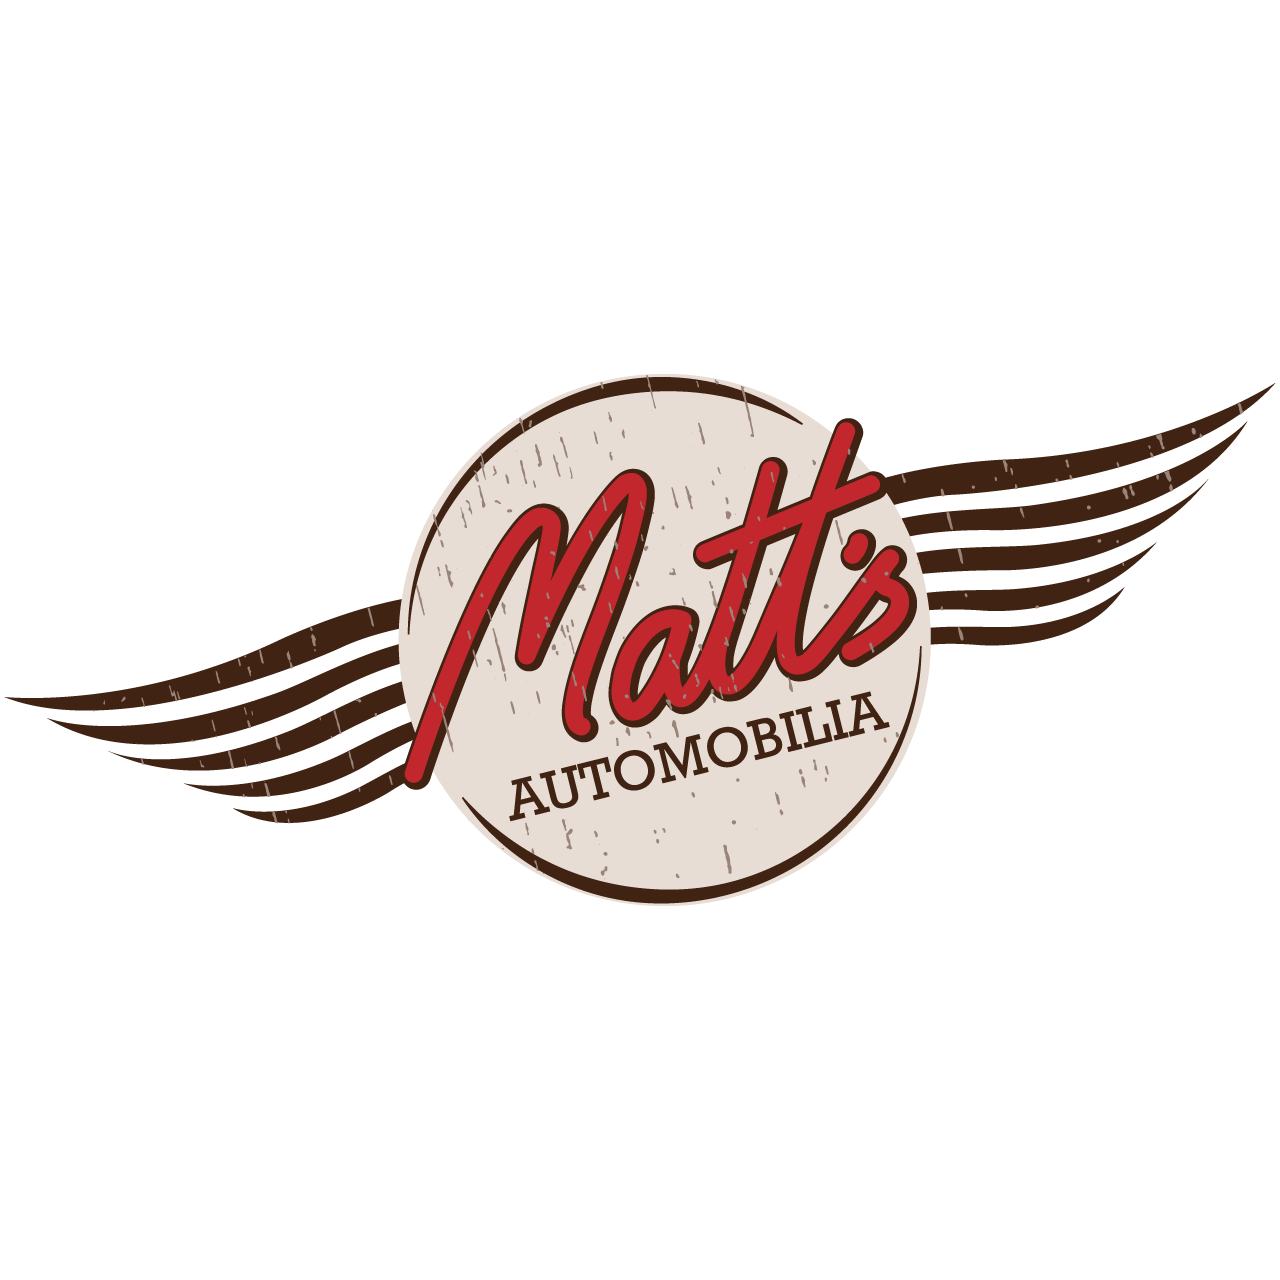 Matts Automobilia